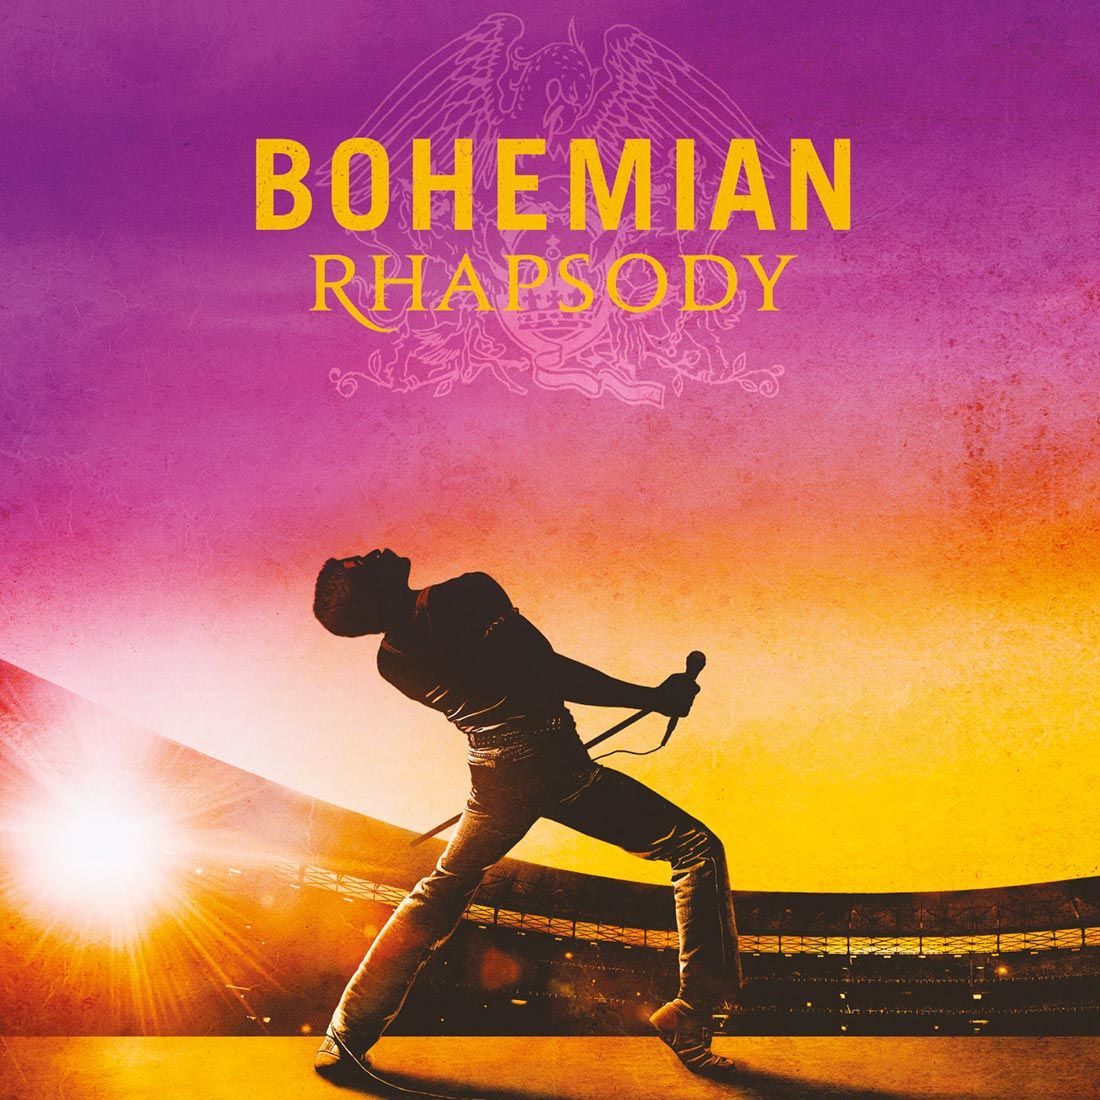 British rock band Queen's biopic musicial Bohemian Rhapsody